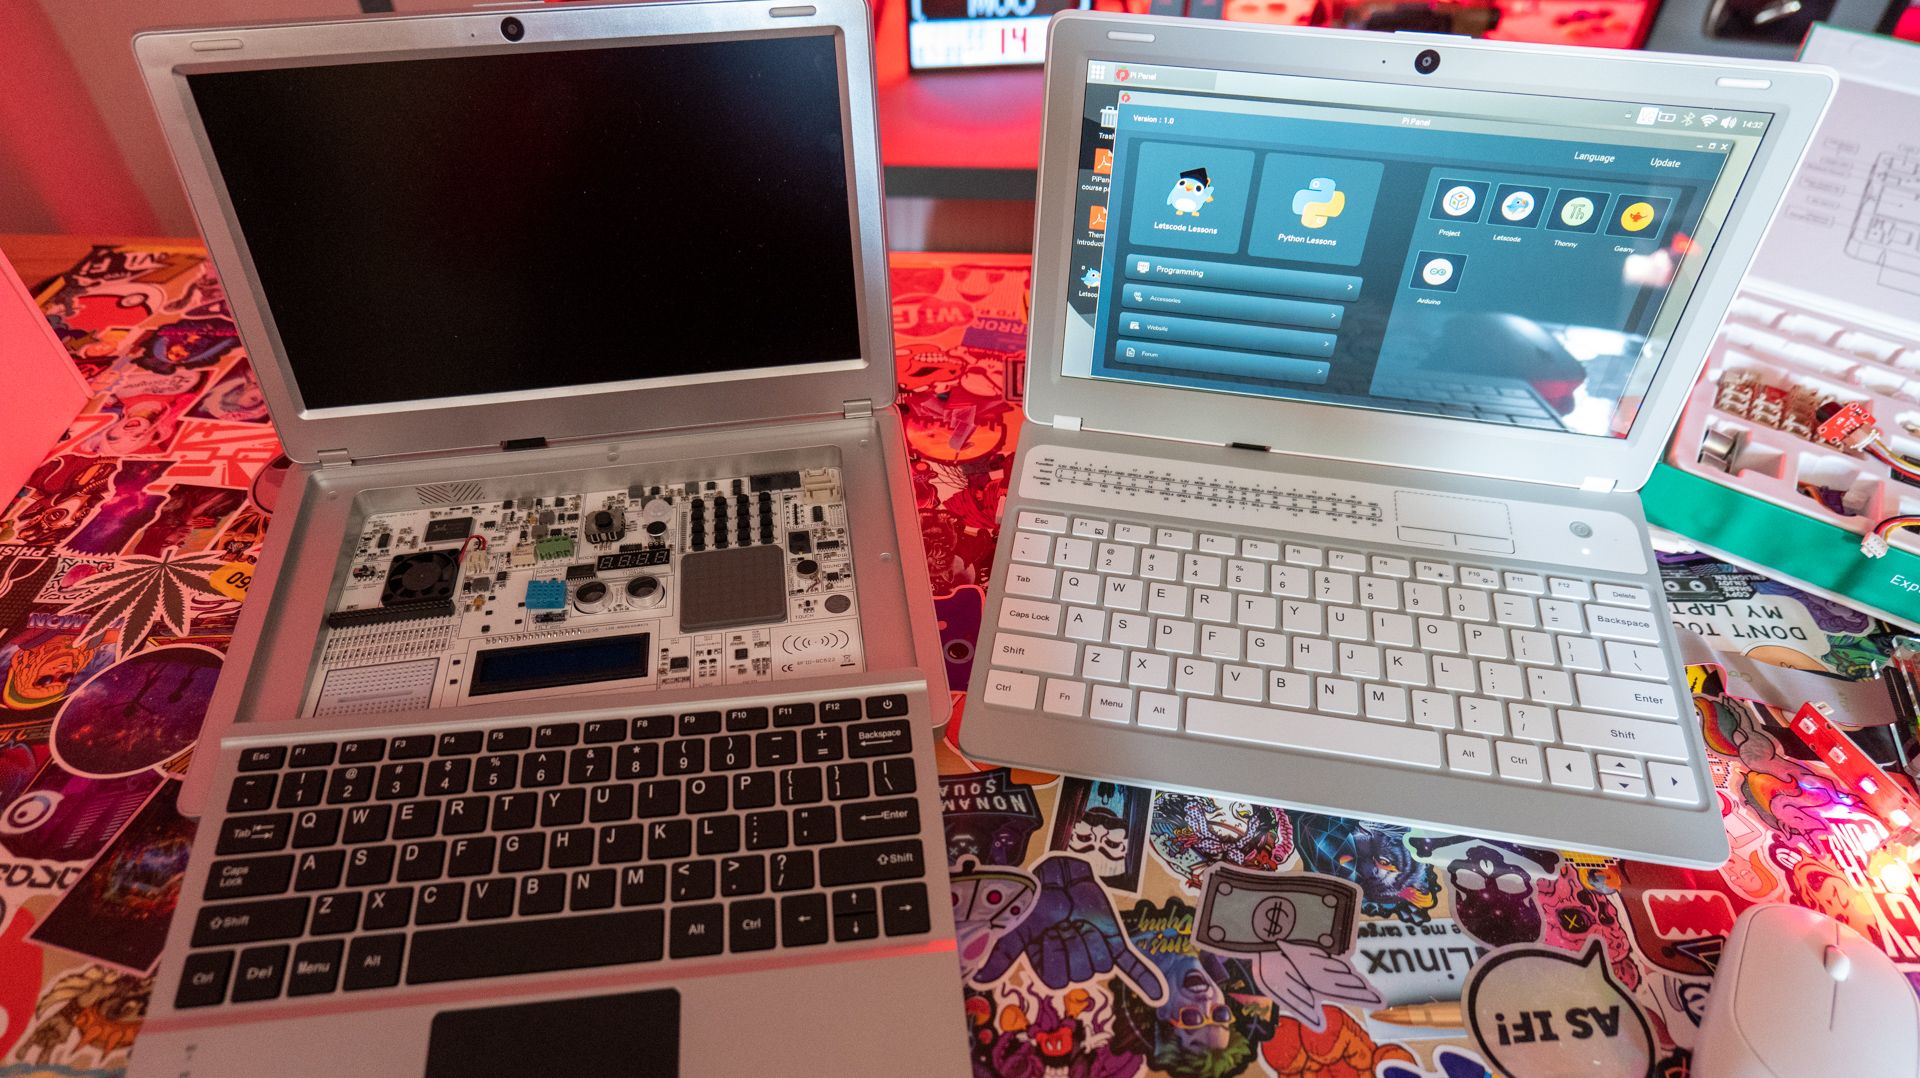 crowpi L pi laptop - crowpi 2 comparison